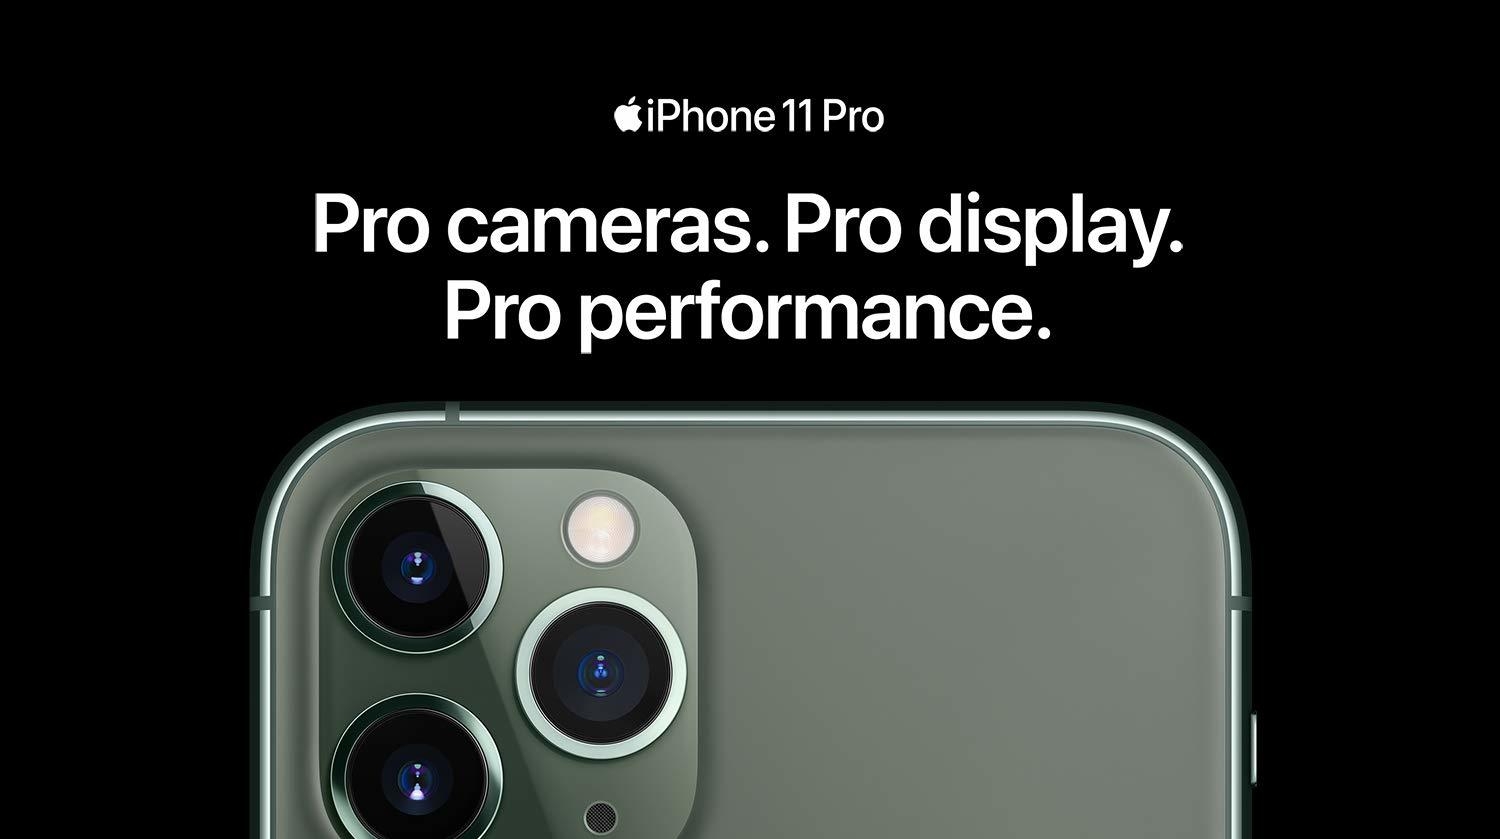 iPhone 11 Pro Pro cameras. Pro display. Pro performance.